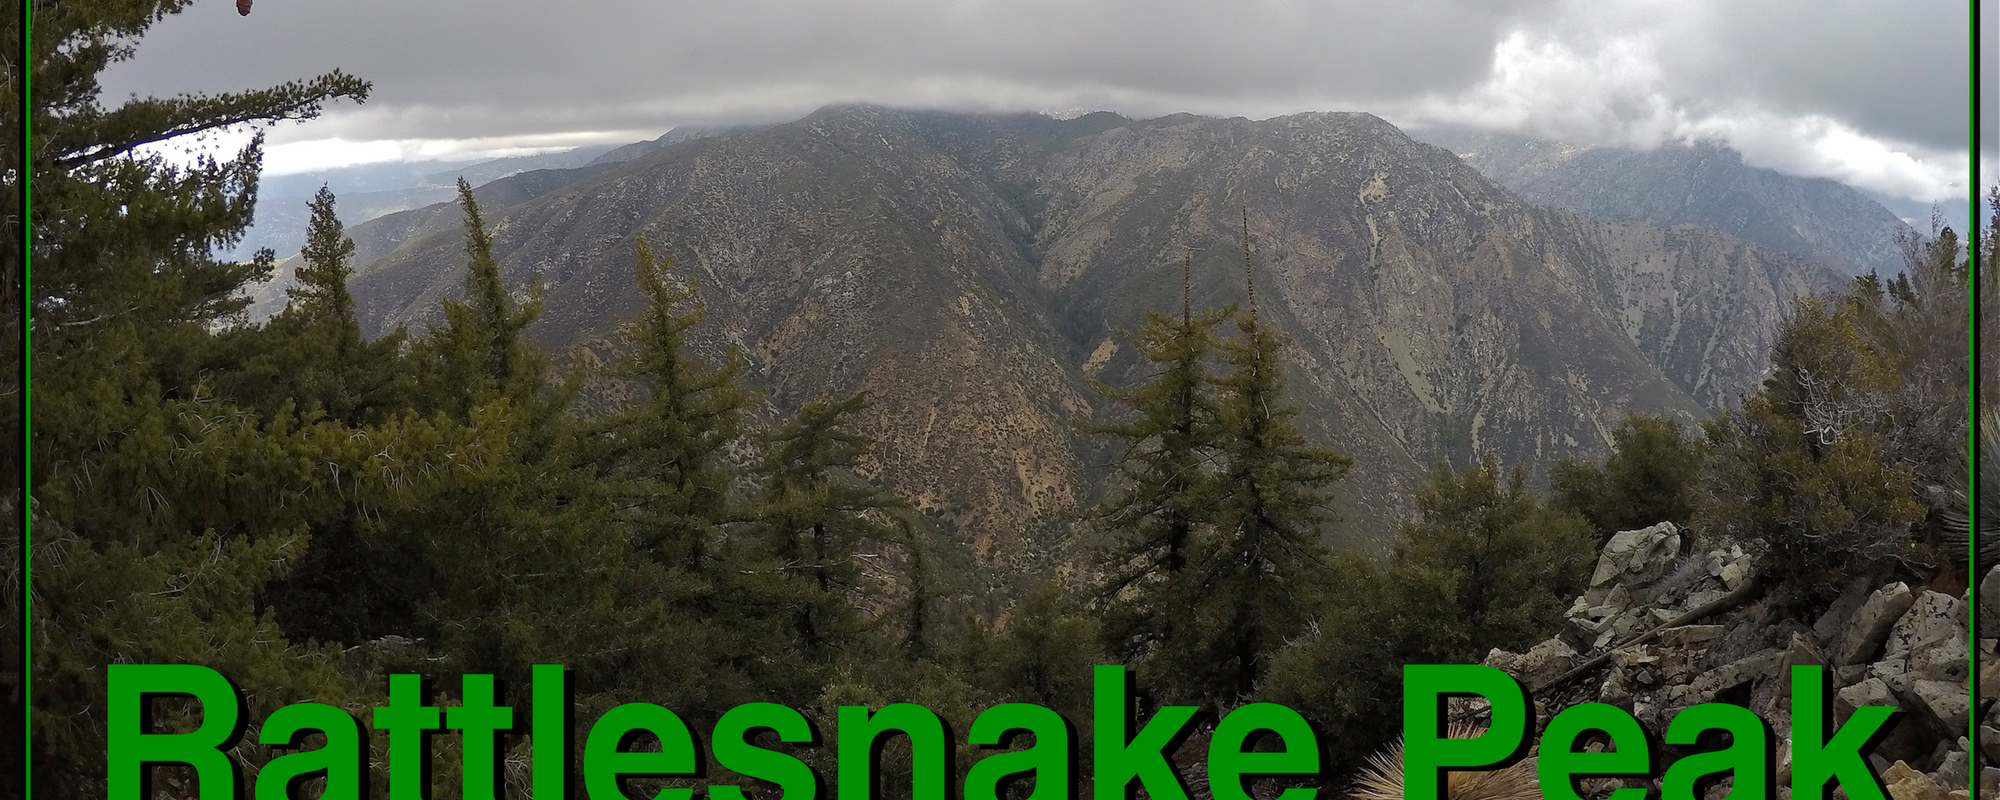 California Mountain Adventures - Rattlesnake Peak